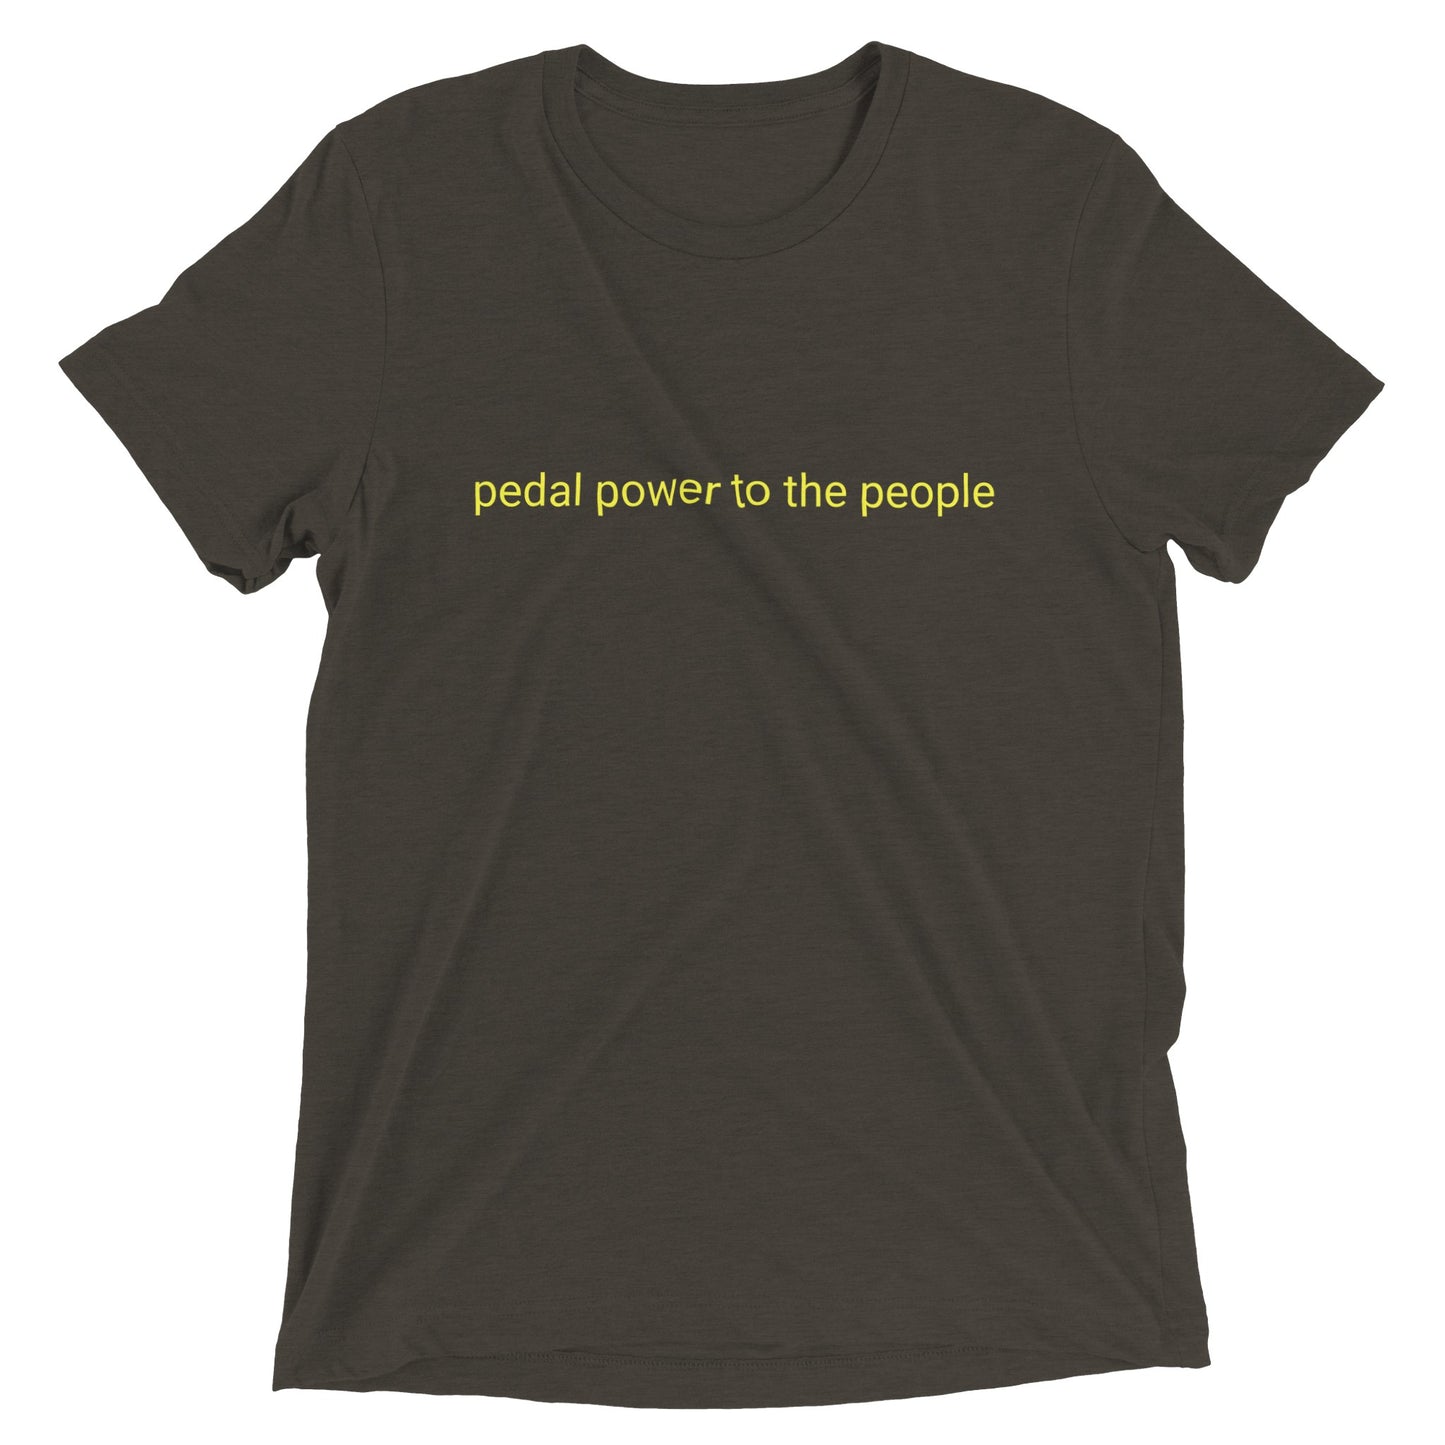 Pedal power to the people - Camiseta de cuello redondo unisex Triblend